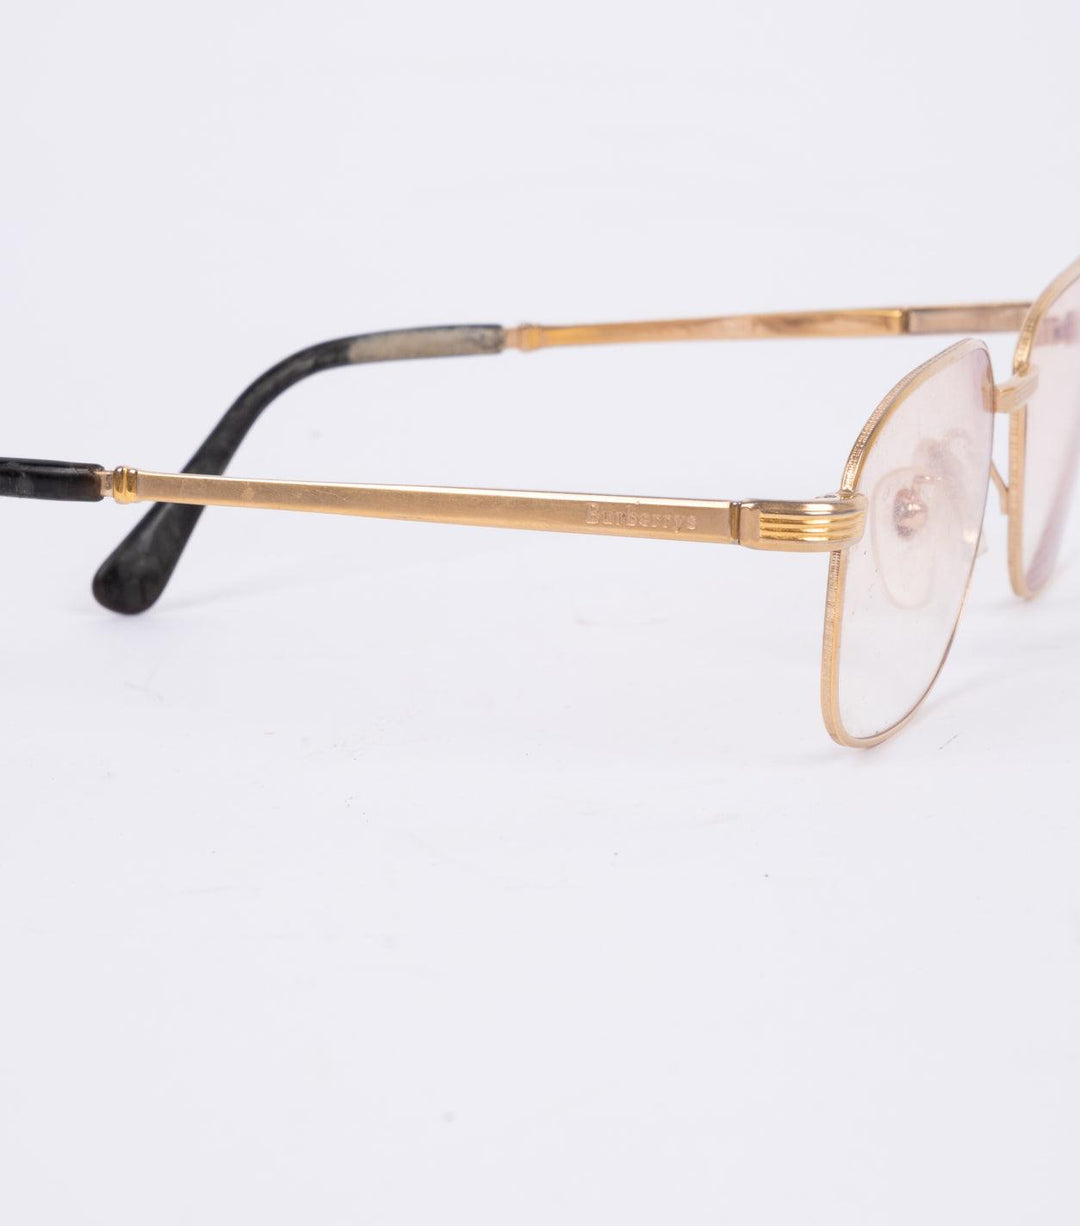 Golden glasses - Volver